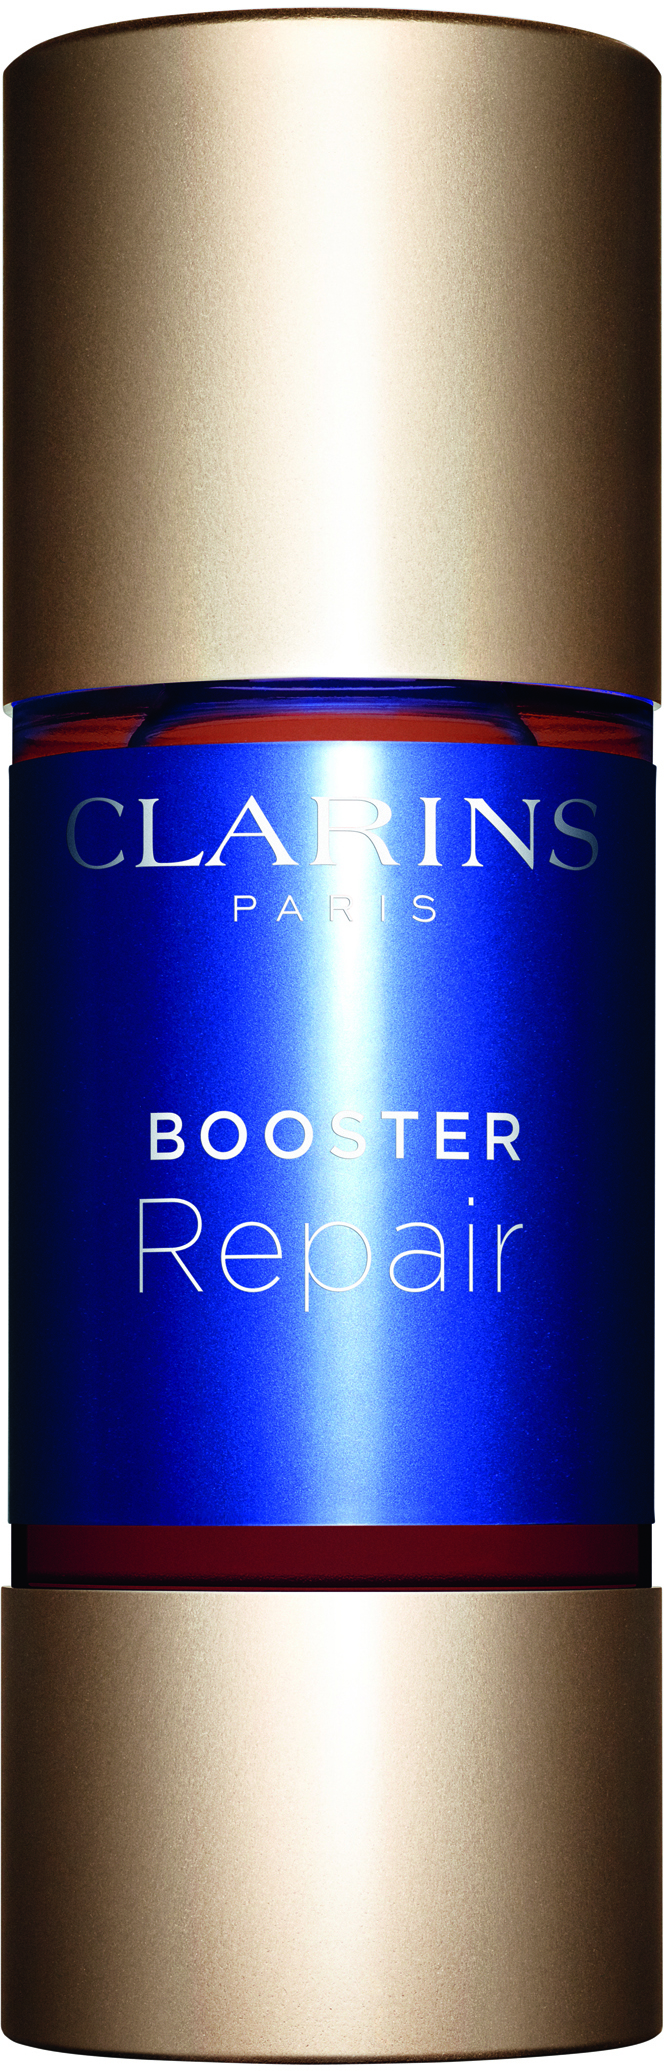 Clarins Booster Repair 15ml